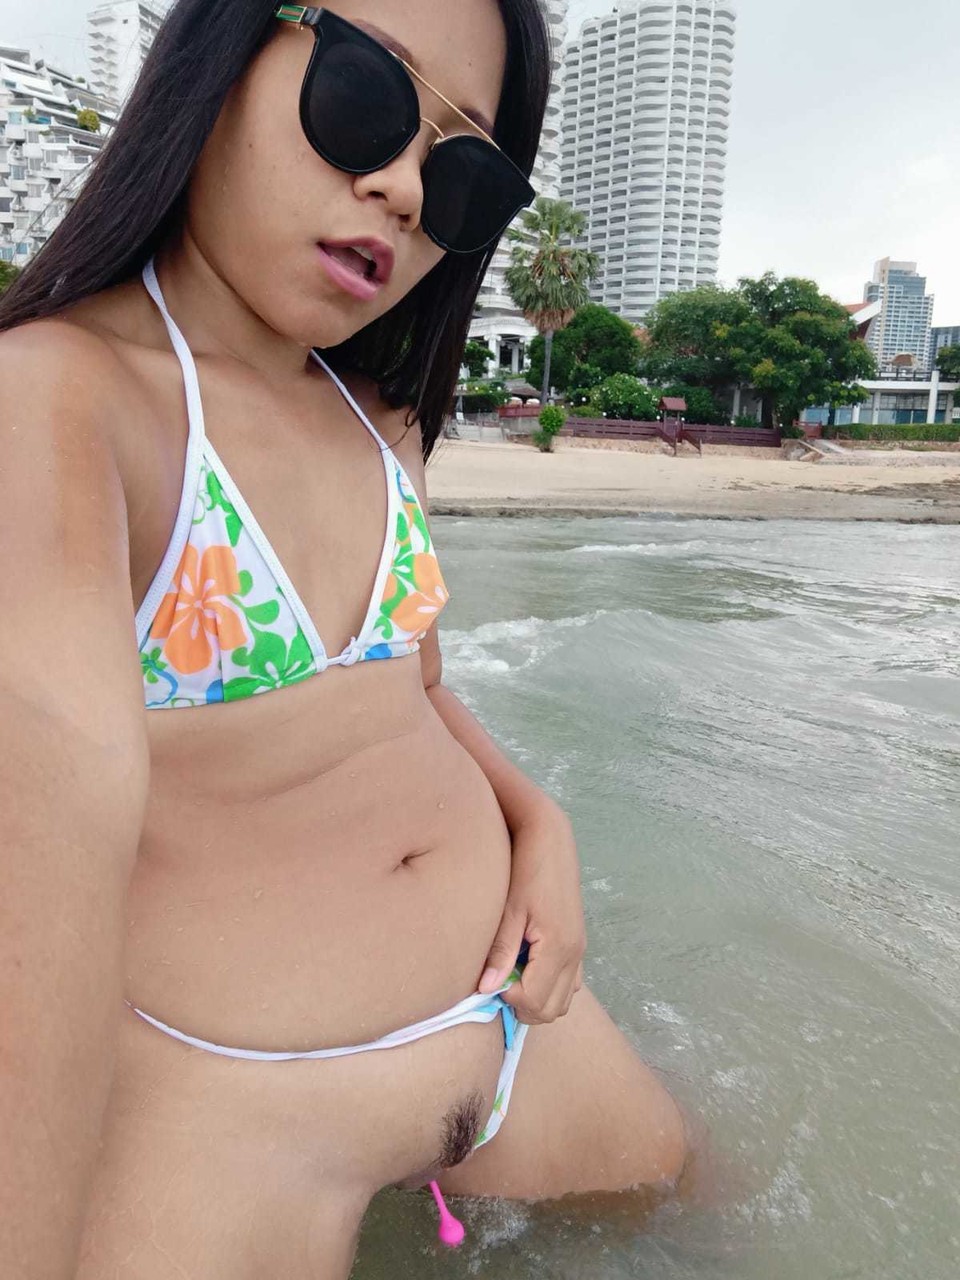 Gorgeous Asian amateur Kiki Asia shows her hot ass in a bikini at the beach photo porno #425545190